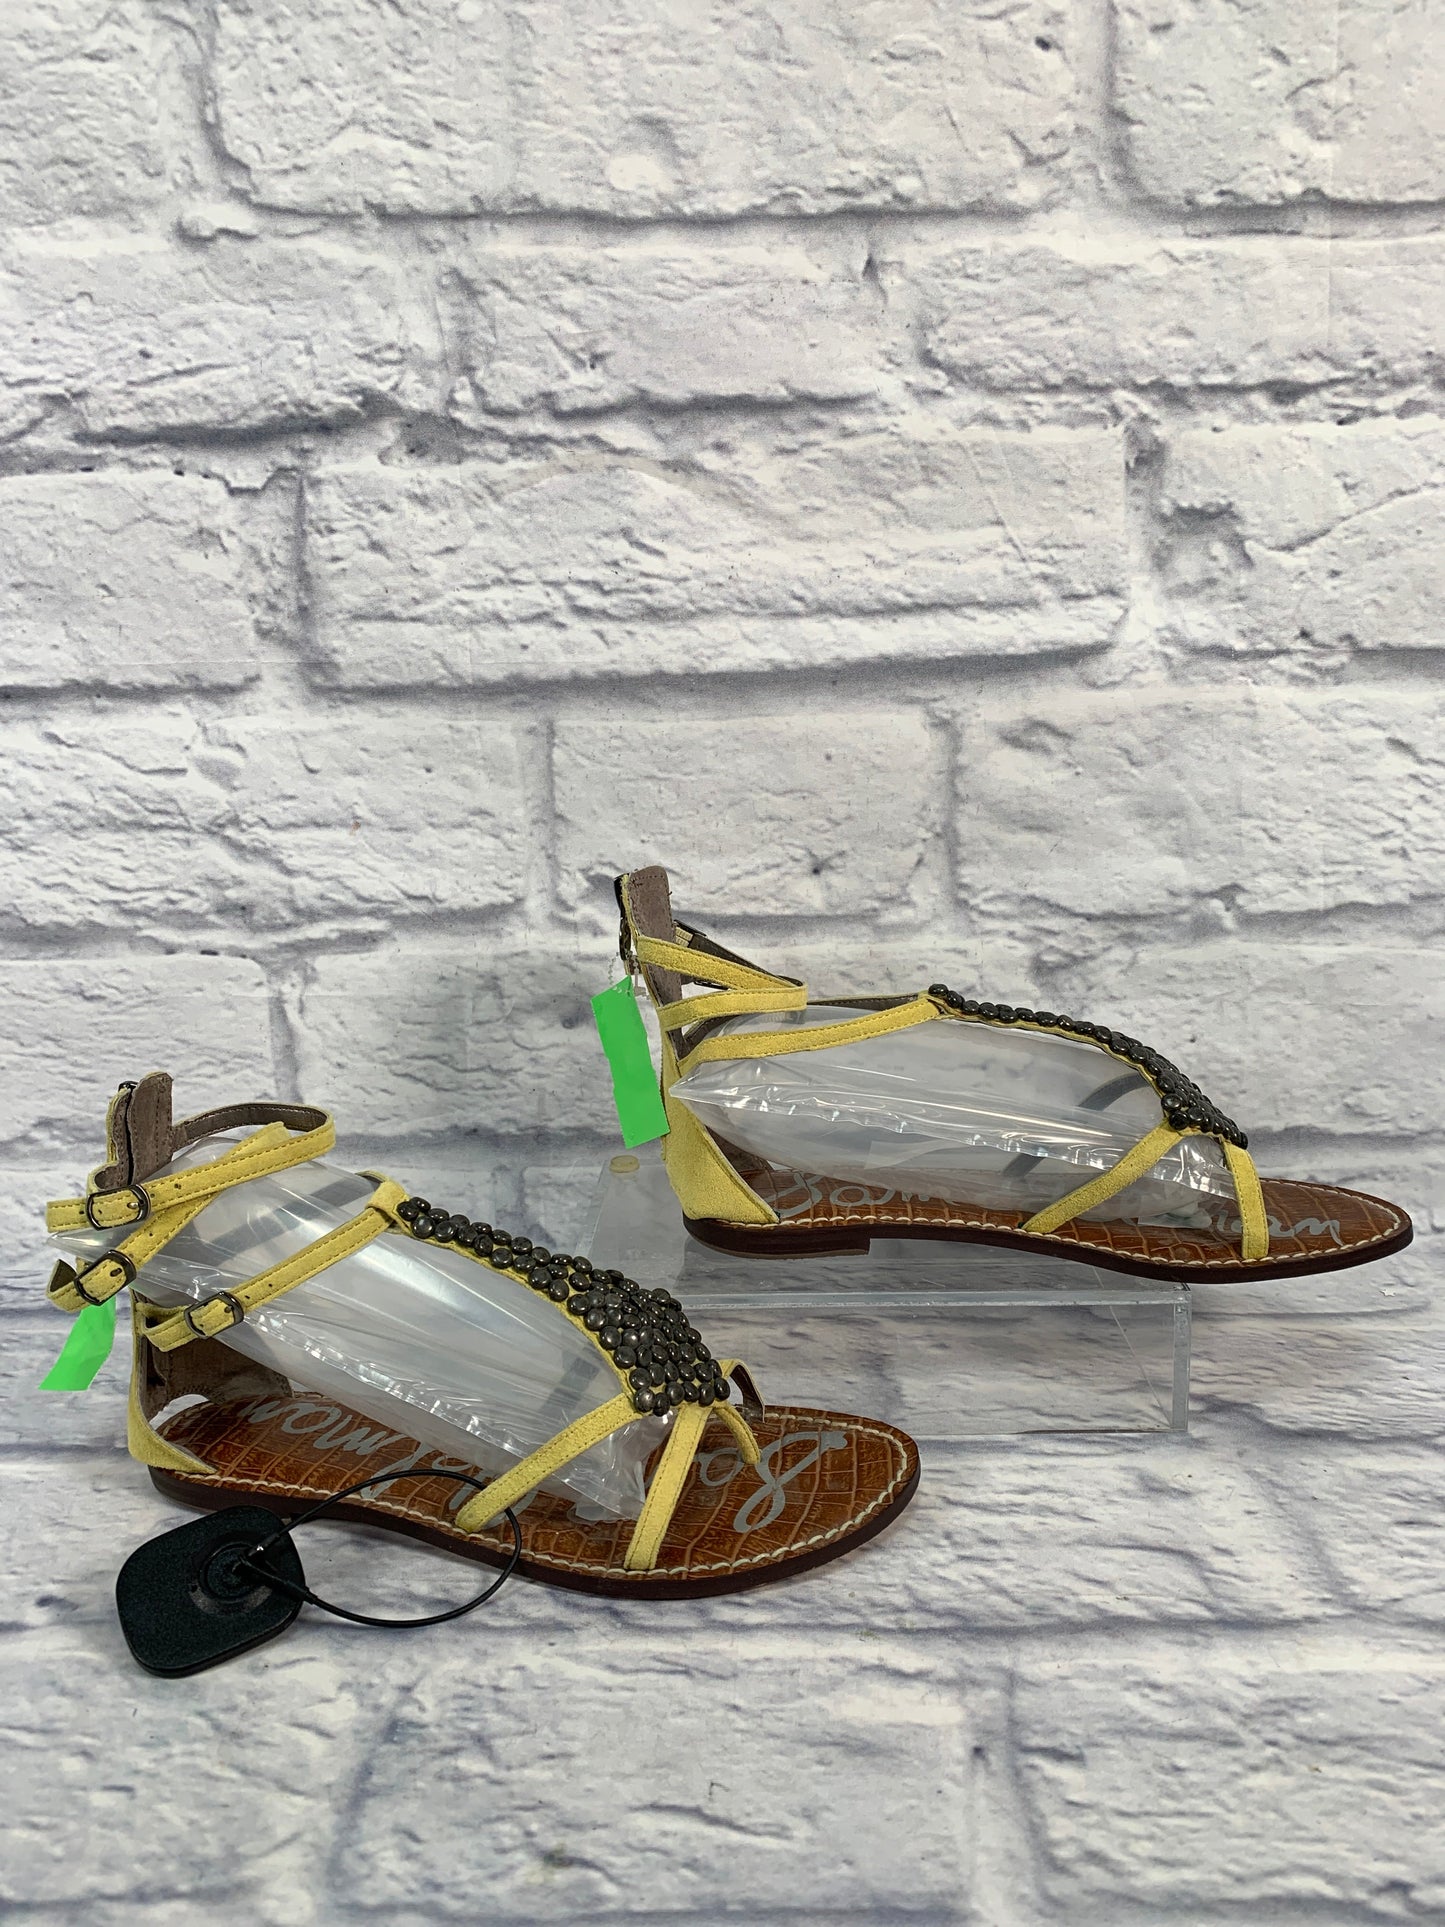 Sandals Flats By Sam Edelman  Size: 7.5